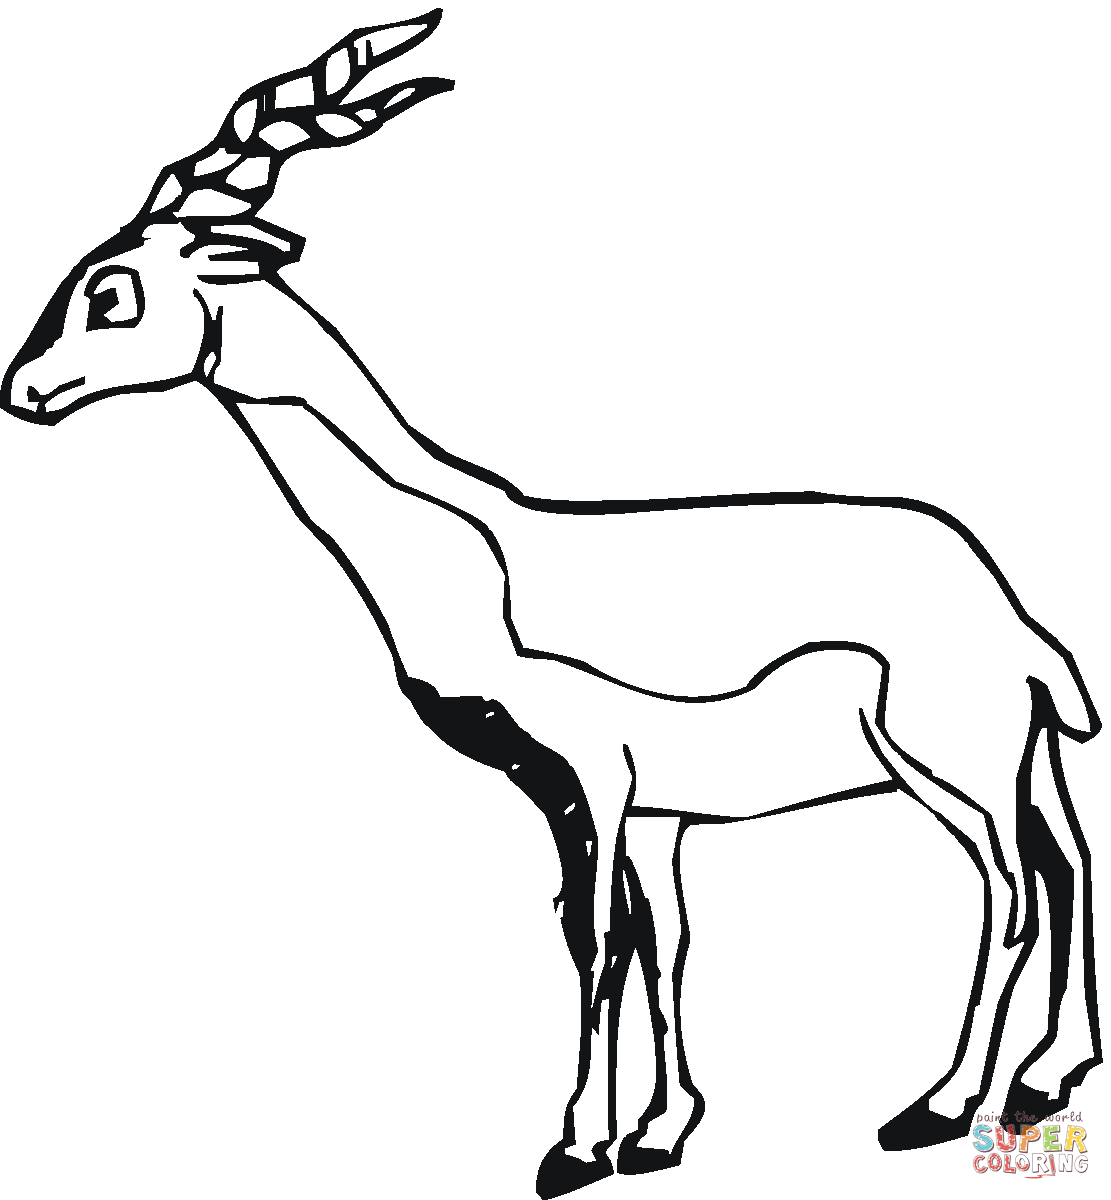 Download 246+ Mammals Antelopes Uganda Kob Coloring Pages PNG PDF File ...